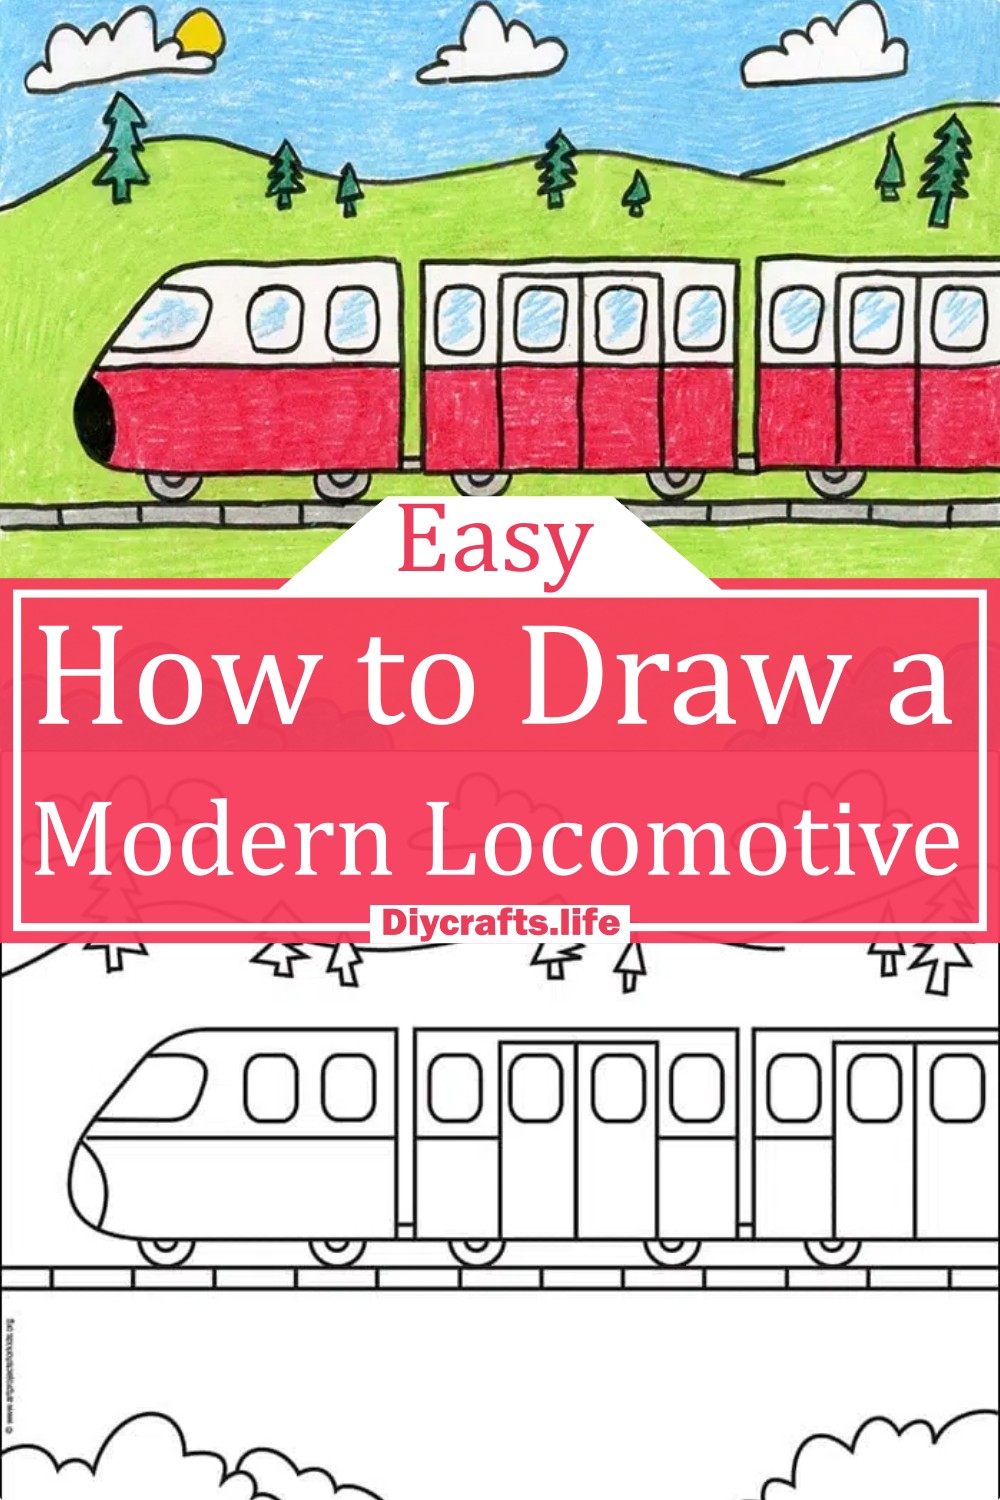 How to Draw a Modern Locomotive